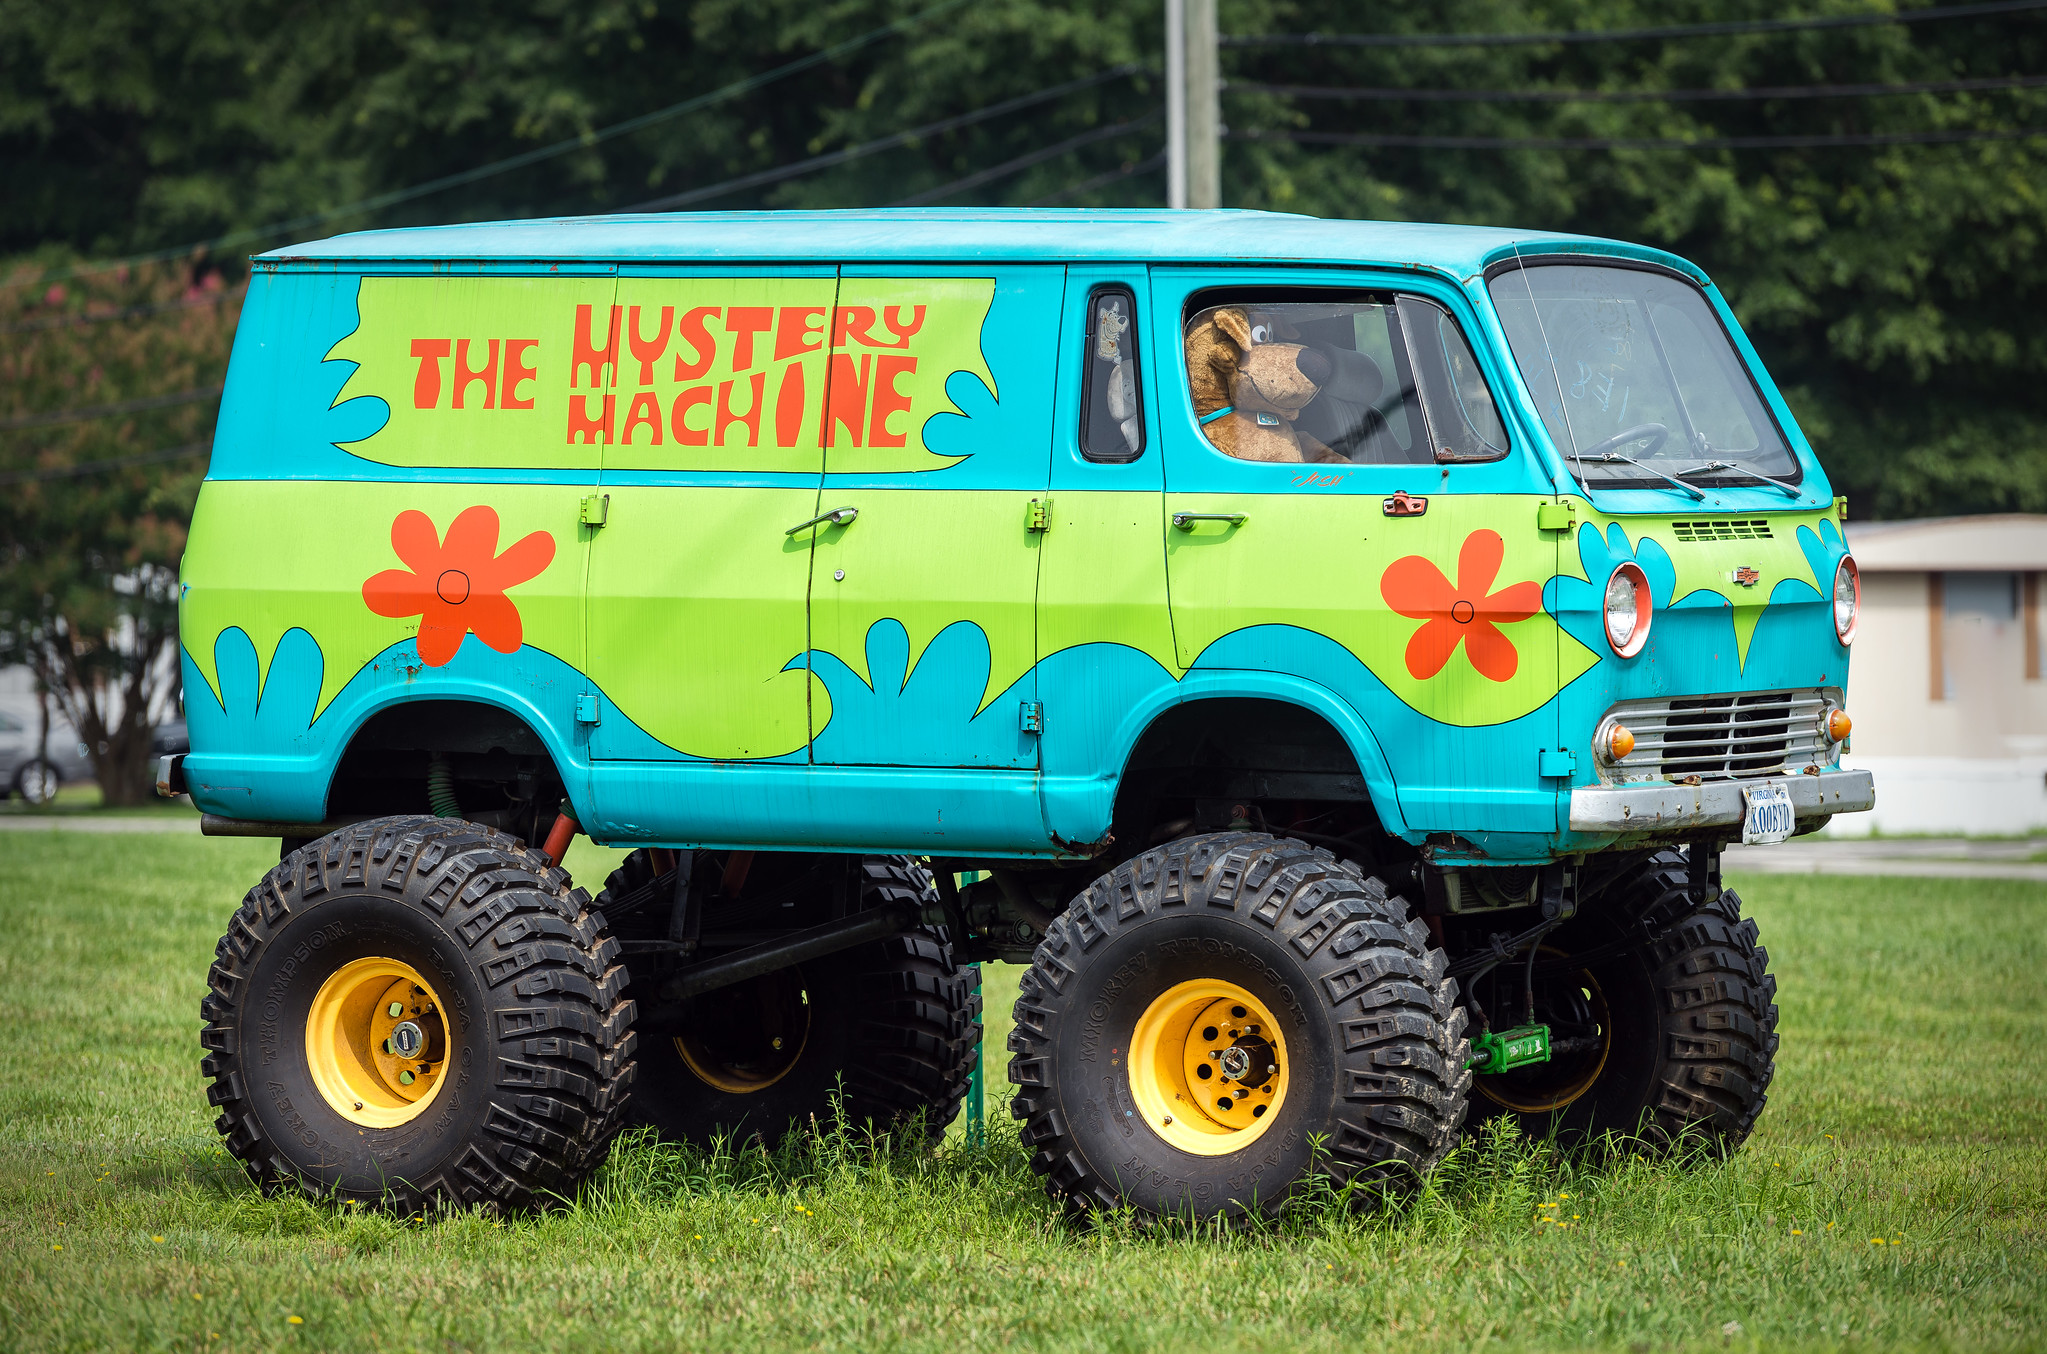 A Monster Truck Mystery Machine.